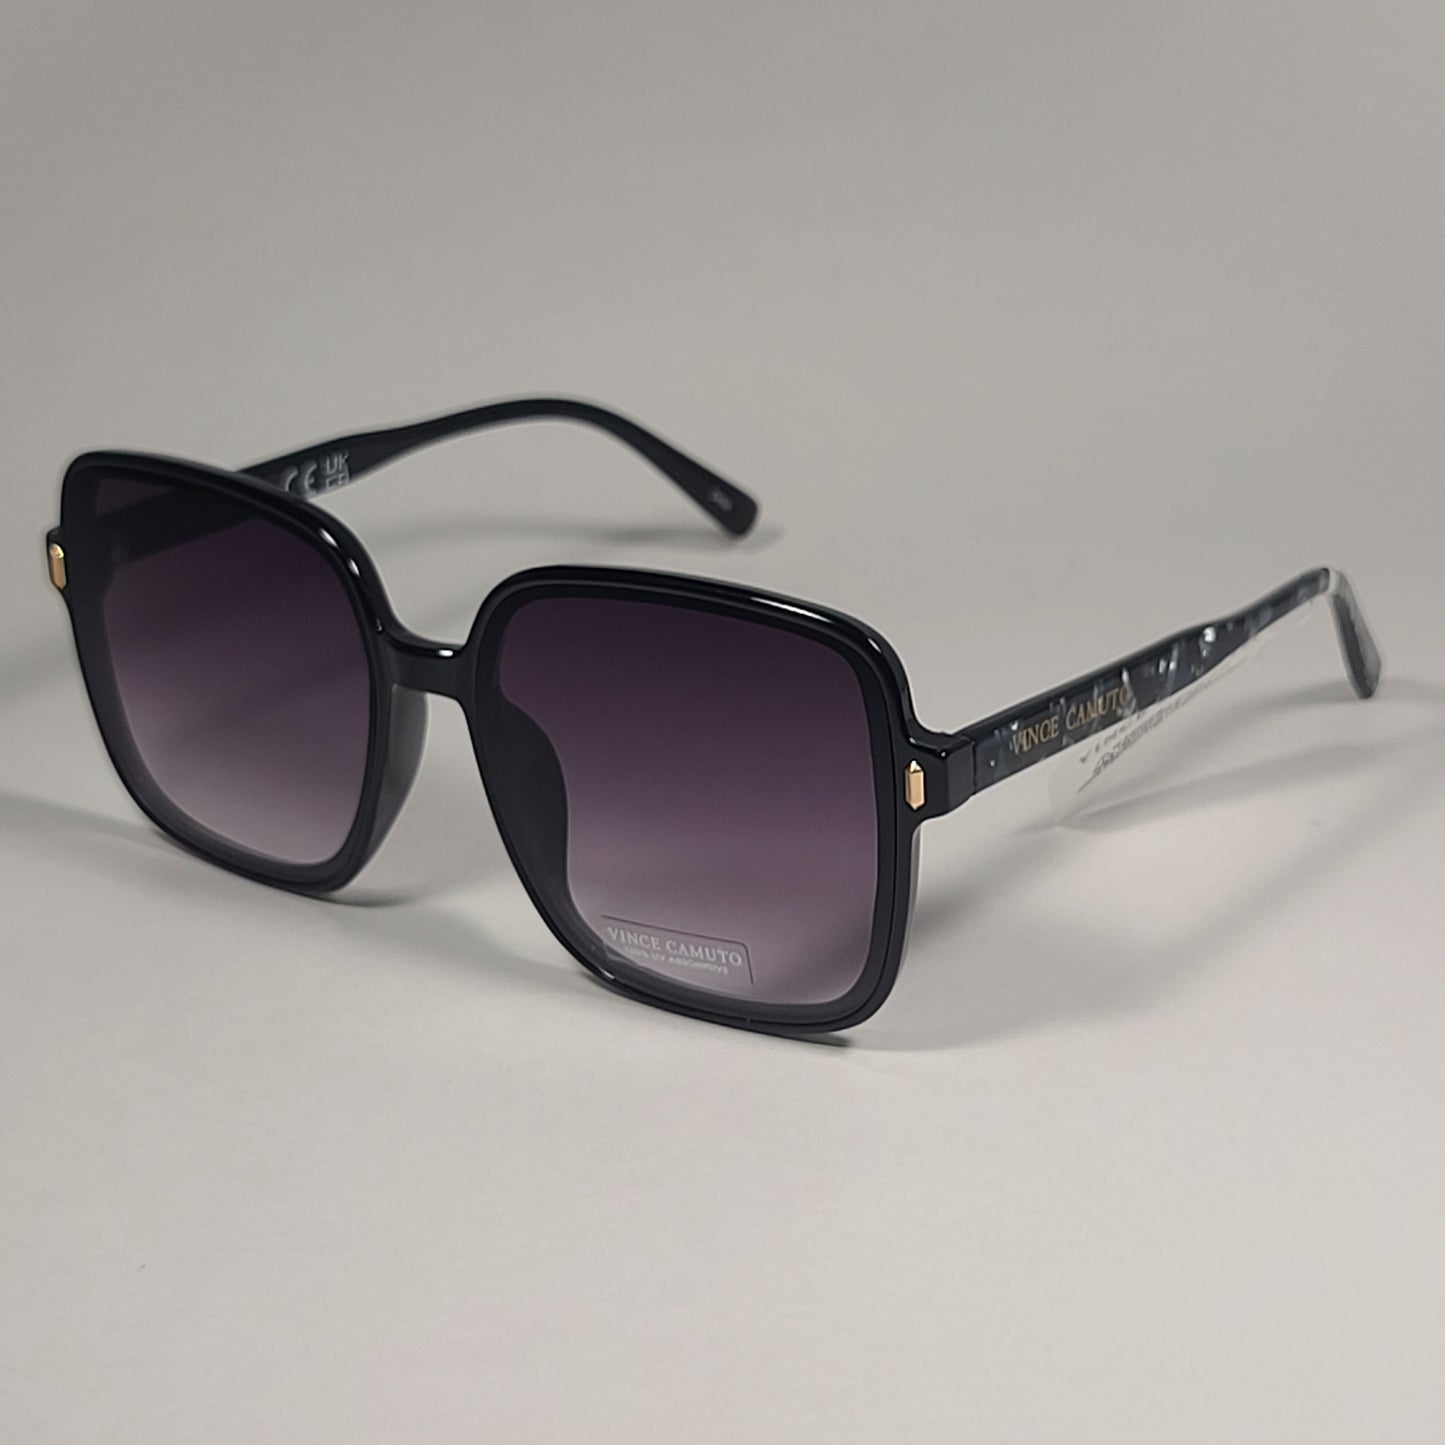 Vince Camuto Women’s VC972 OX Oversize Square Sunglasses Shiny Black Frame Gray Smoke Lens - Sunglasses